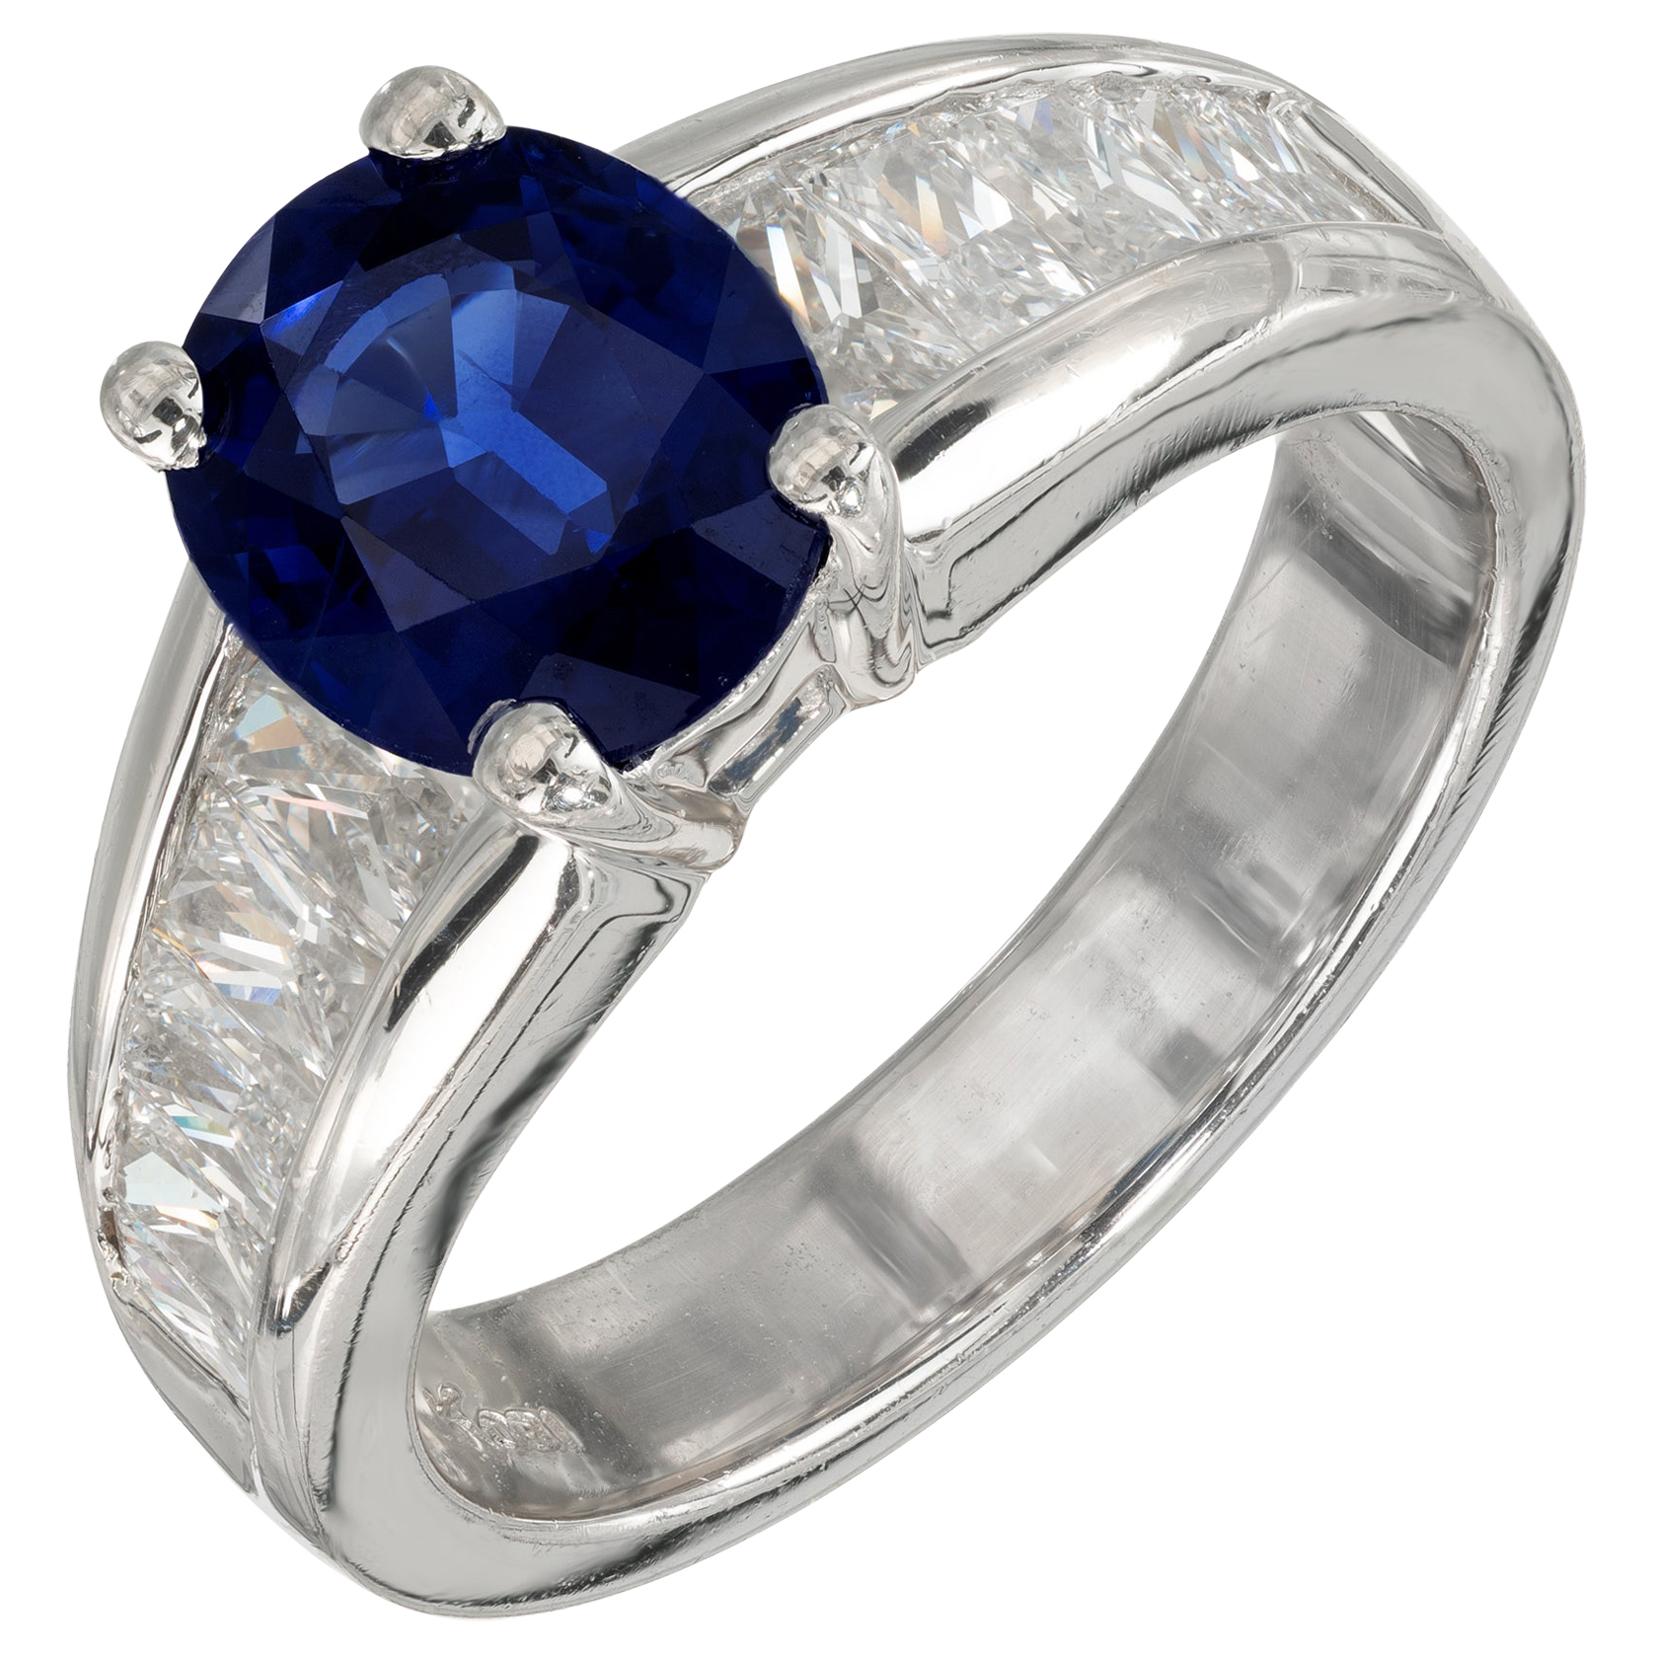 Kobi Verlobungsring aus Platin mit 2,25 Karat ovalem blauem Saphir und strahlendem Diamant